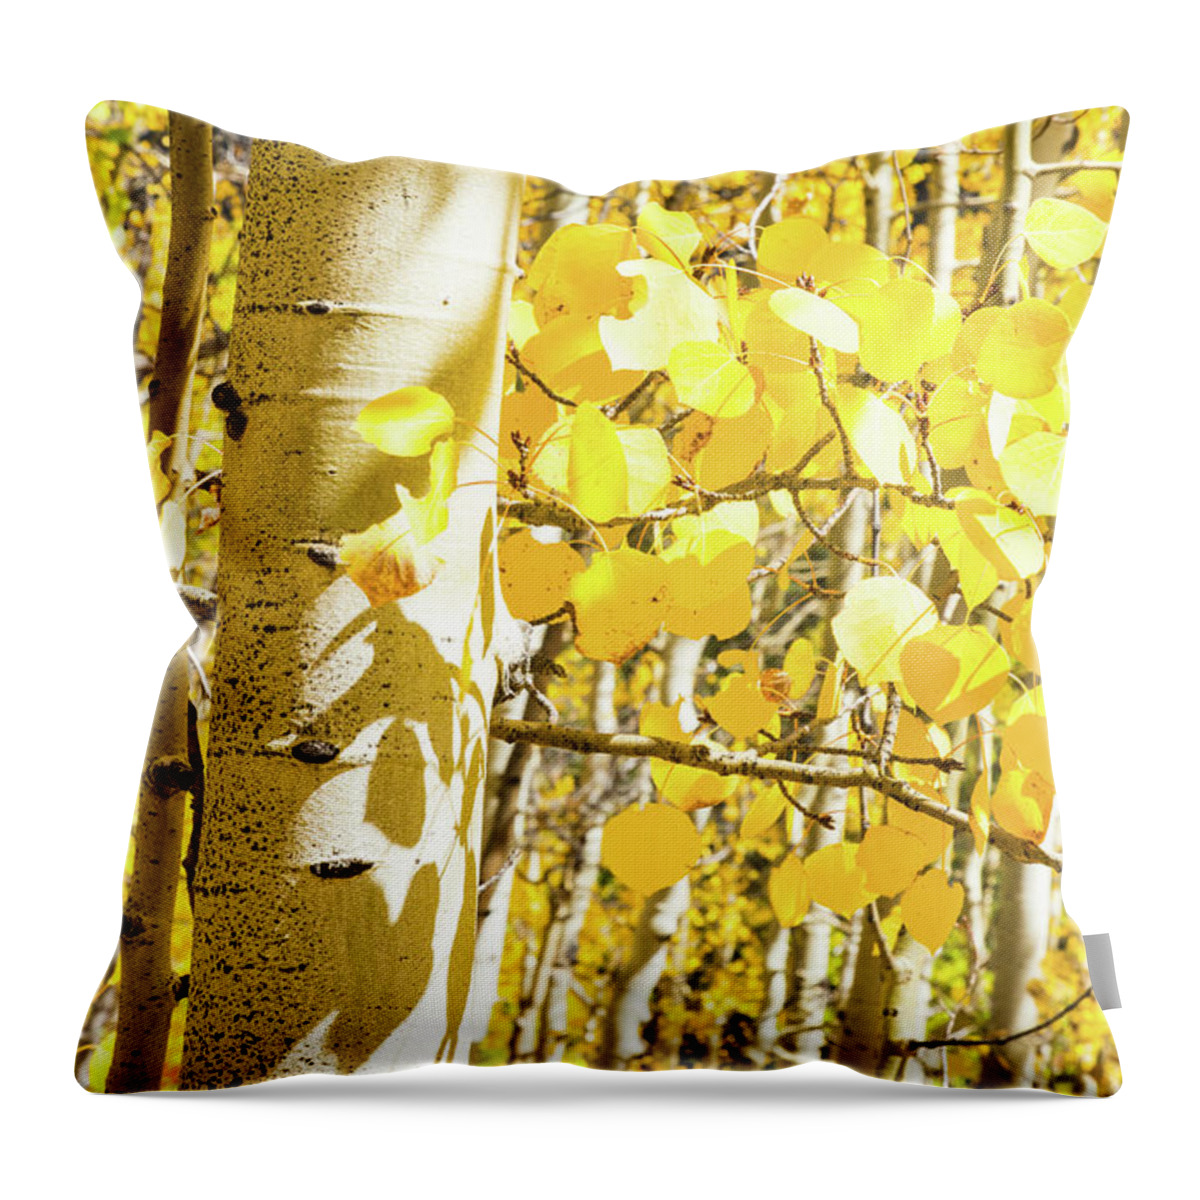 Aspen Trees Throw Pillow featuring the photograph Aspen Yellow by Joe Kopp